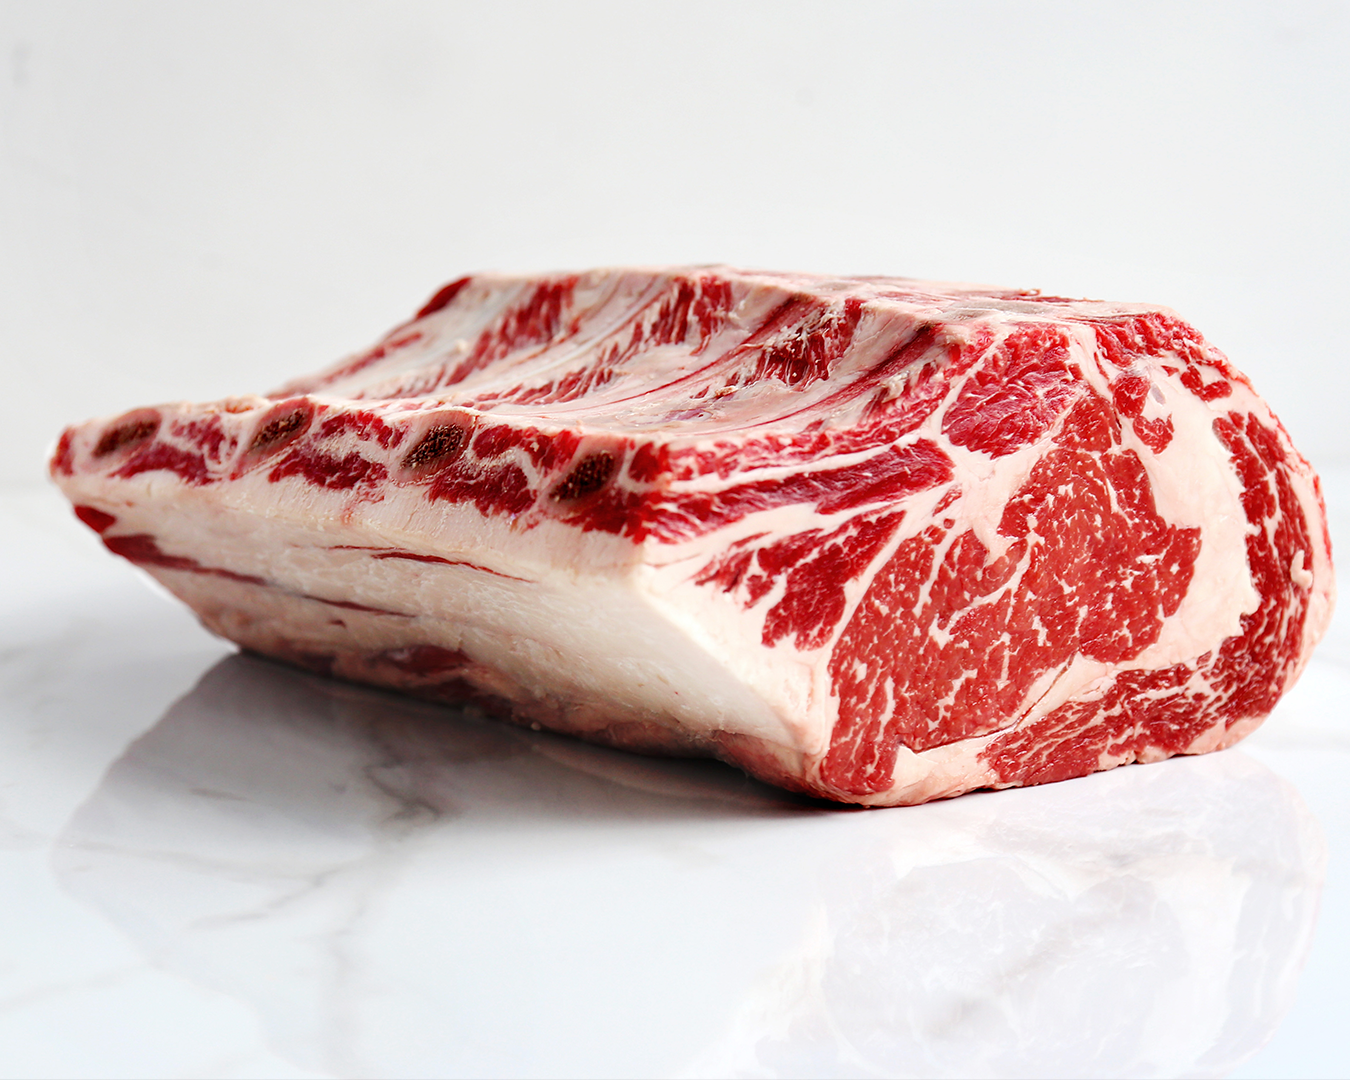 USDA Prime Beef Standing Rib Roast